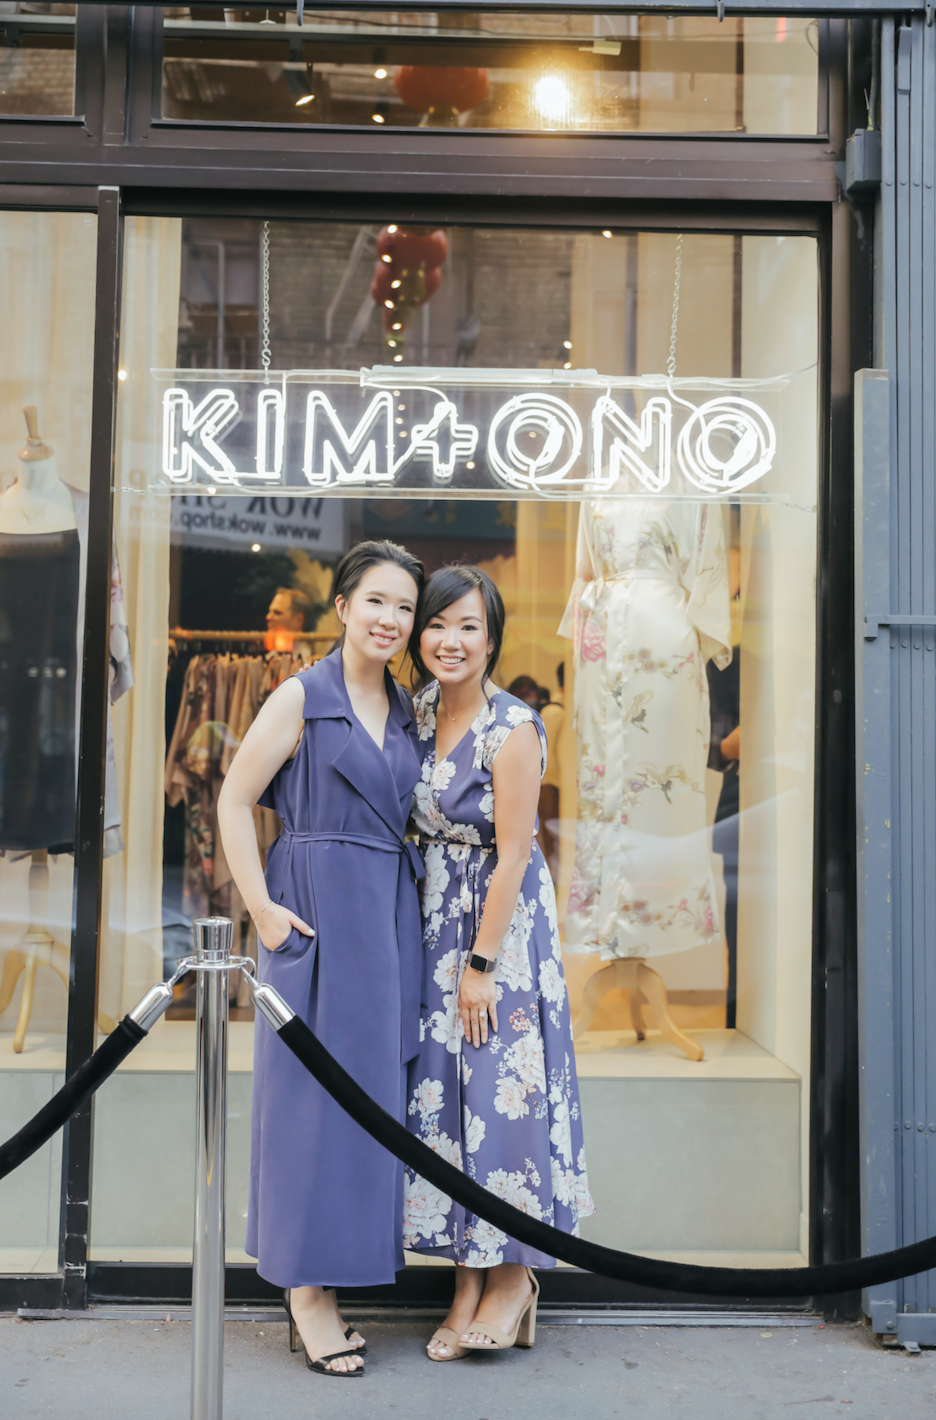 KIM+ONO Kimono Store